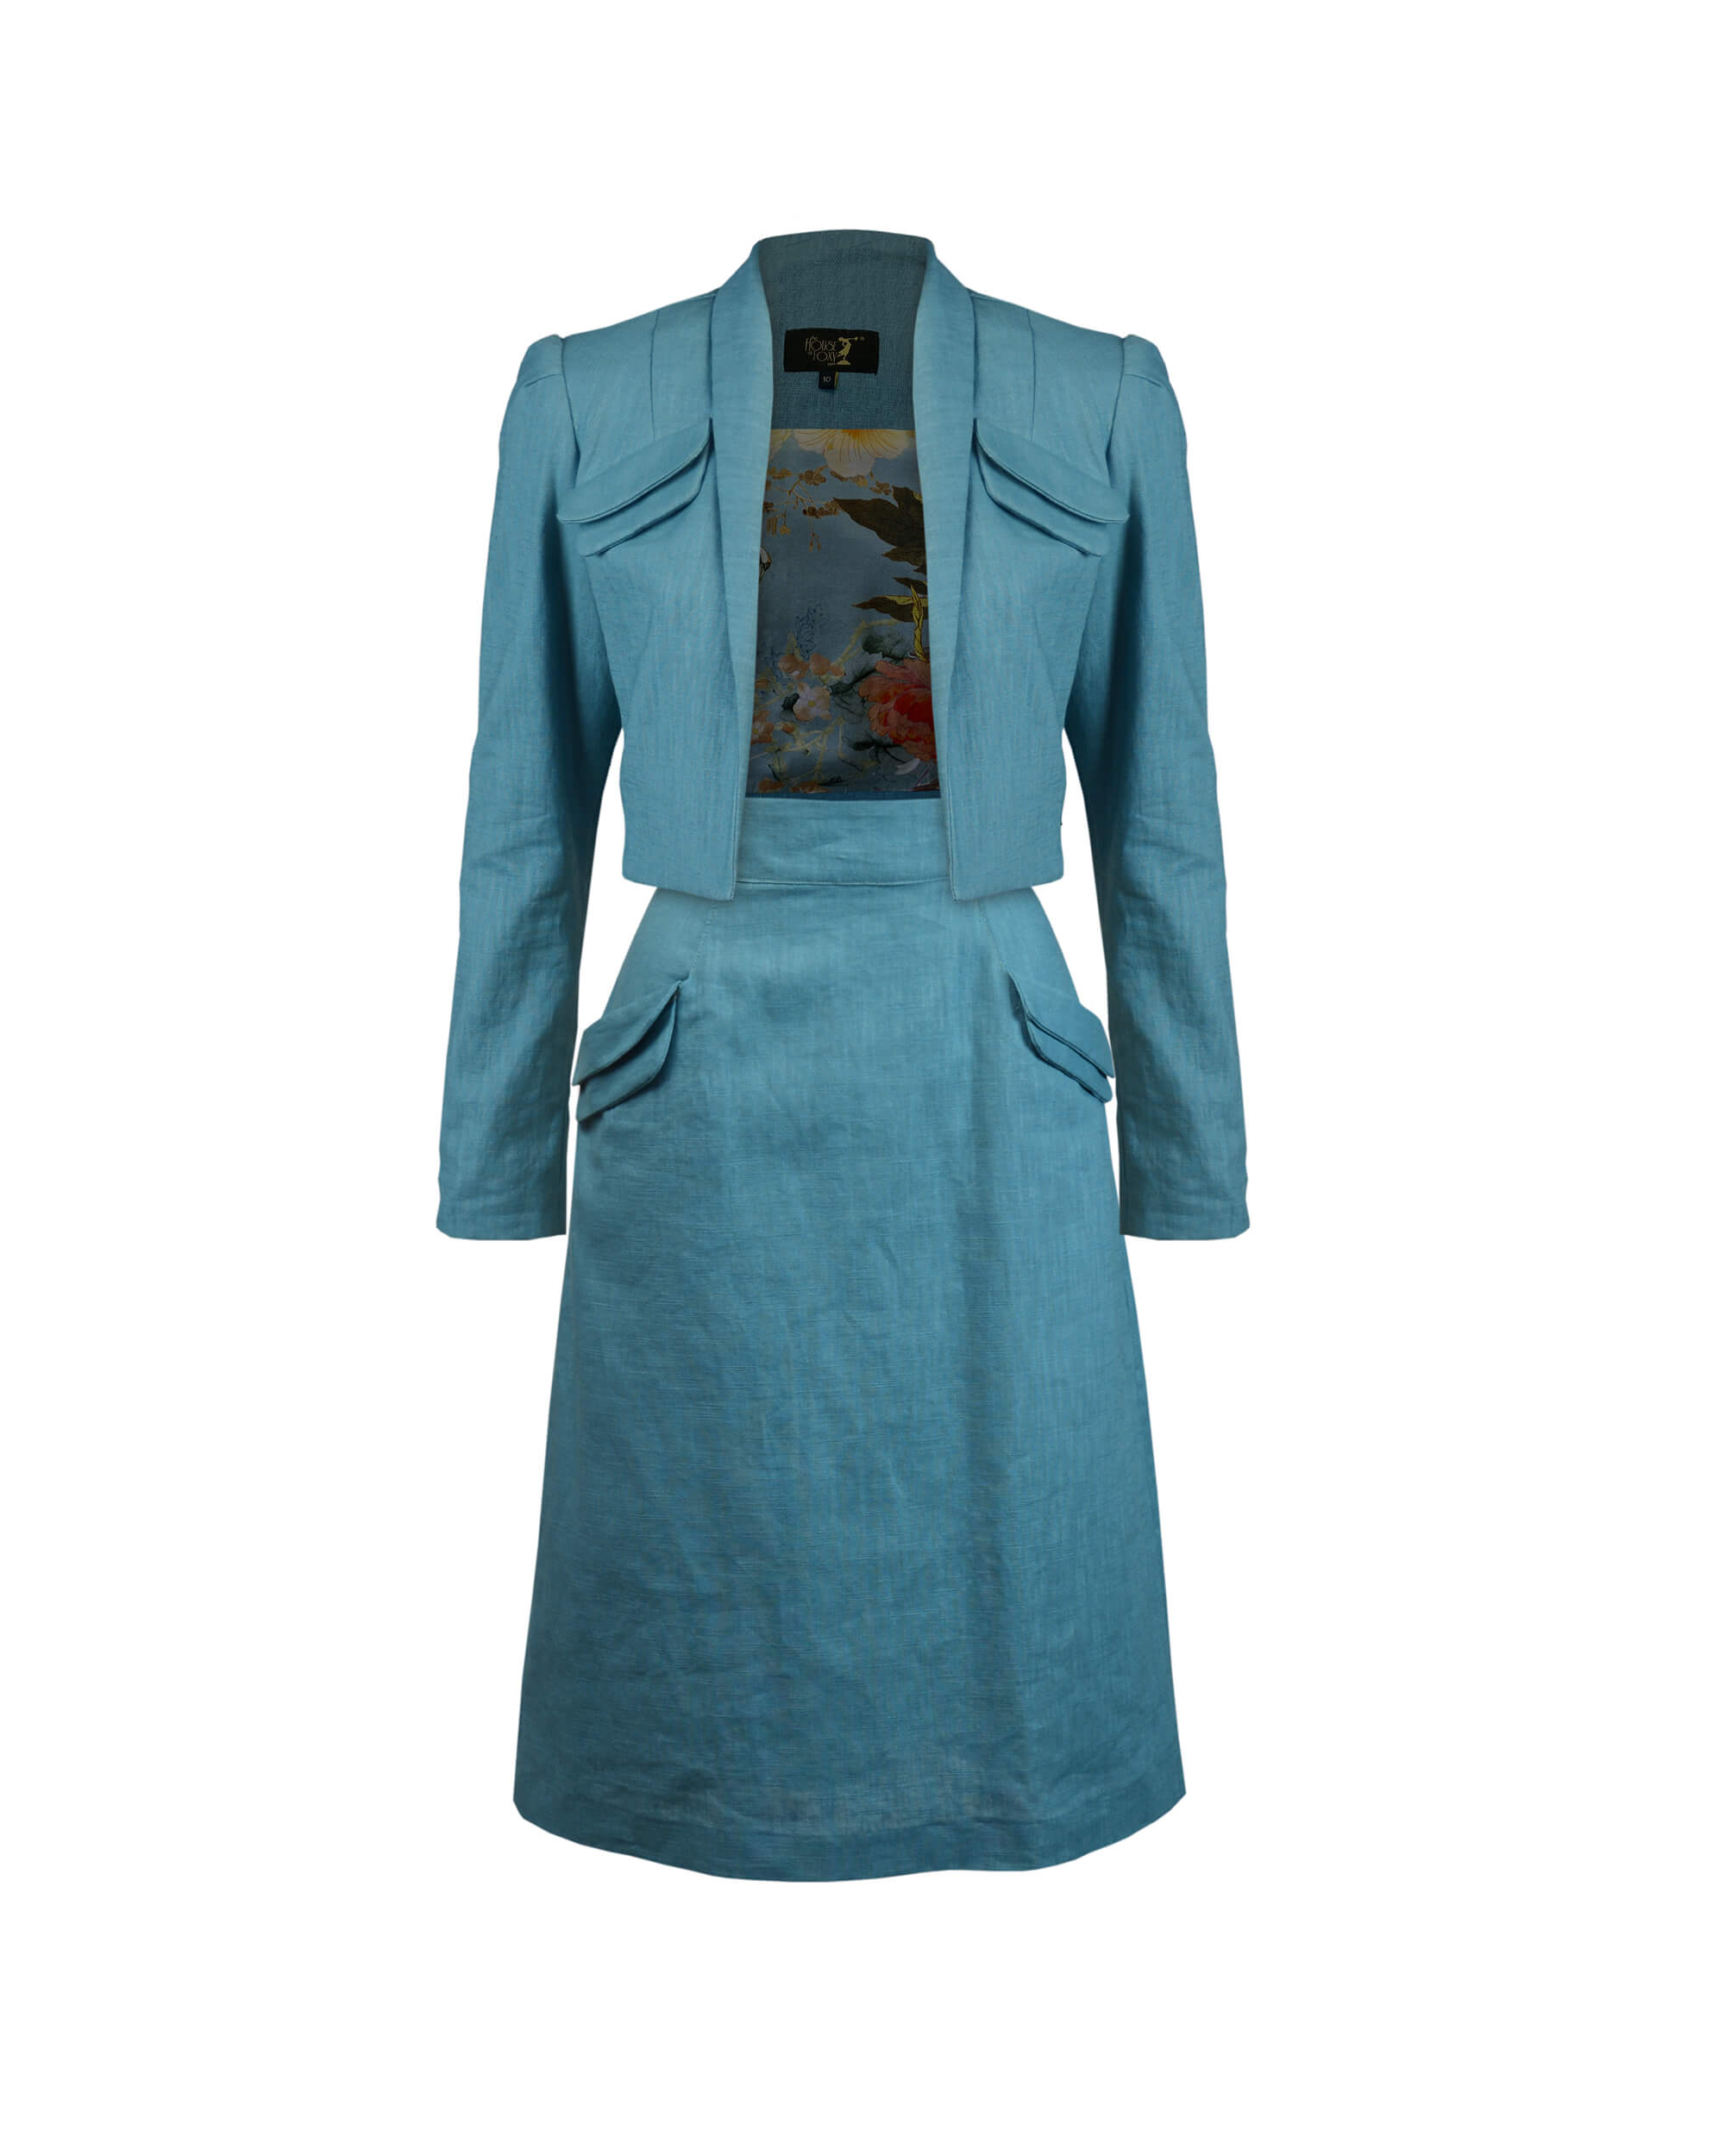 40s Crop Jacket Skirt Suit - Light teal linen